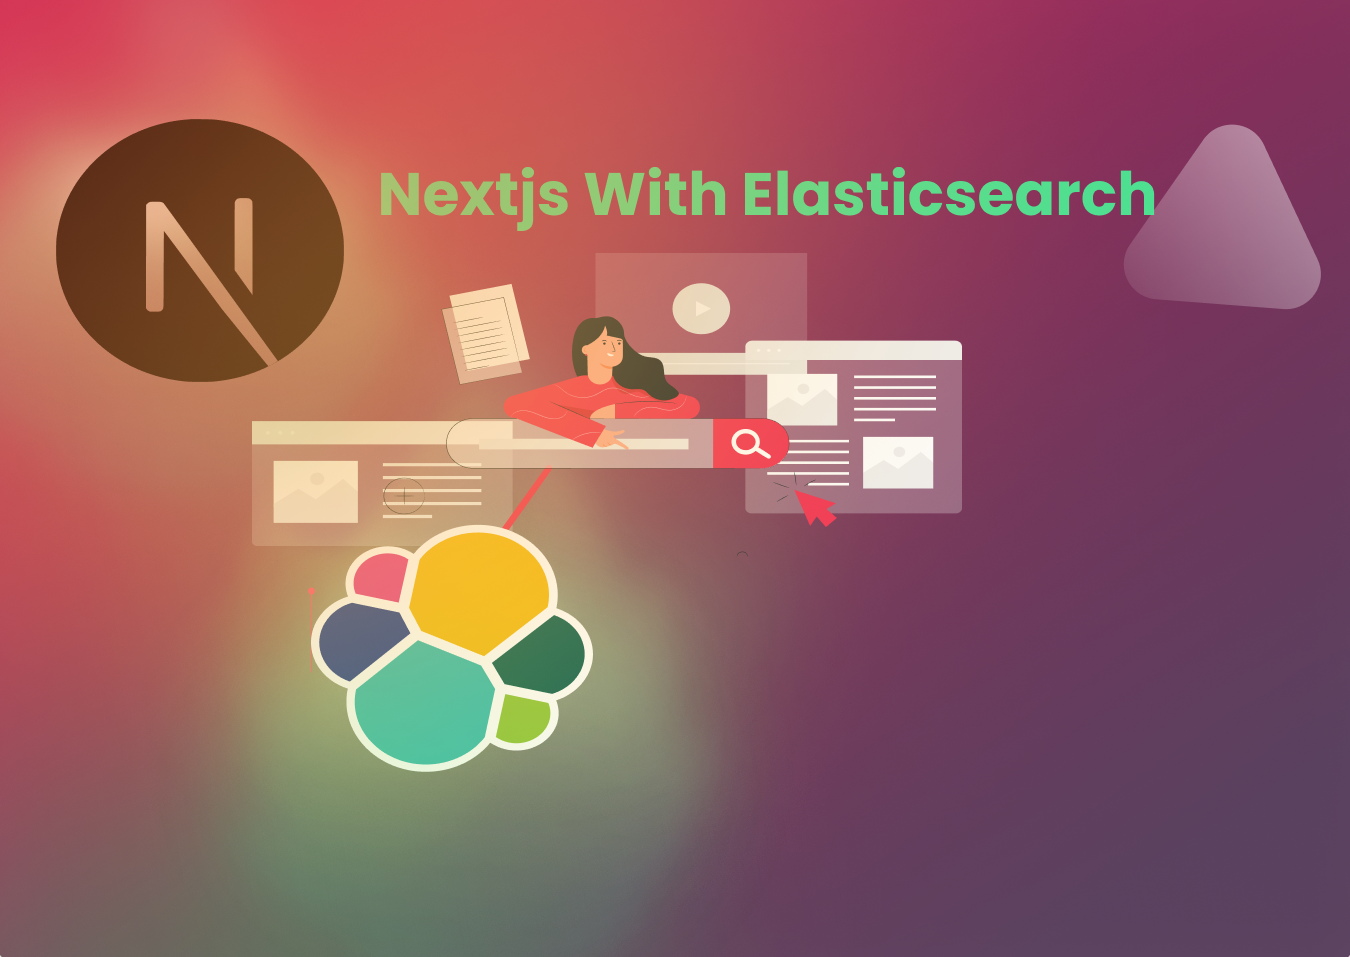 Next.js with Elasticsearch